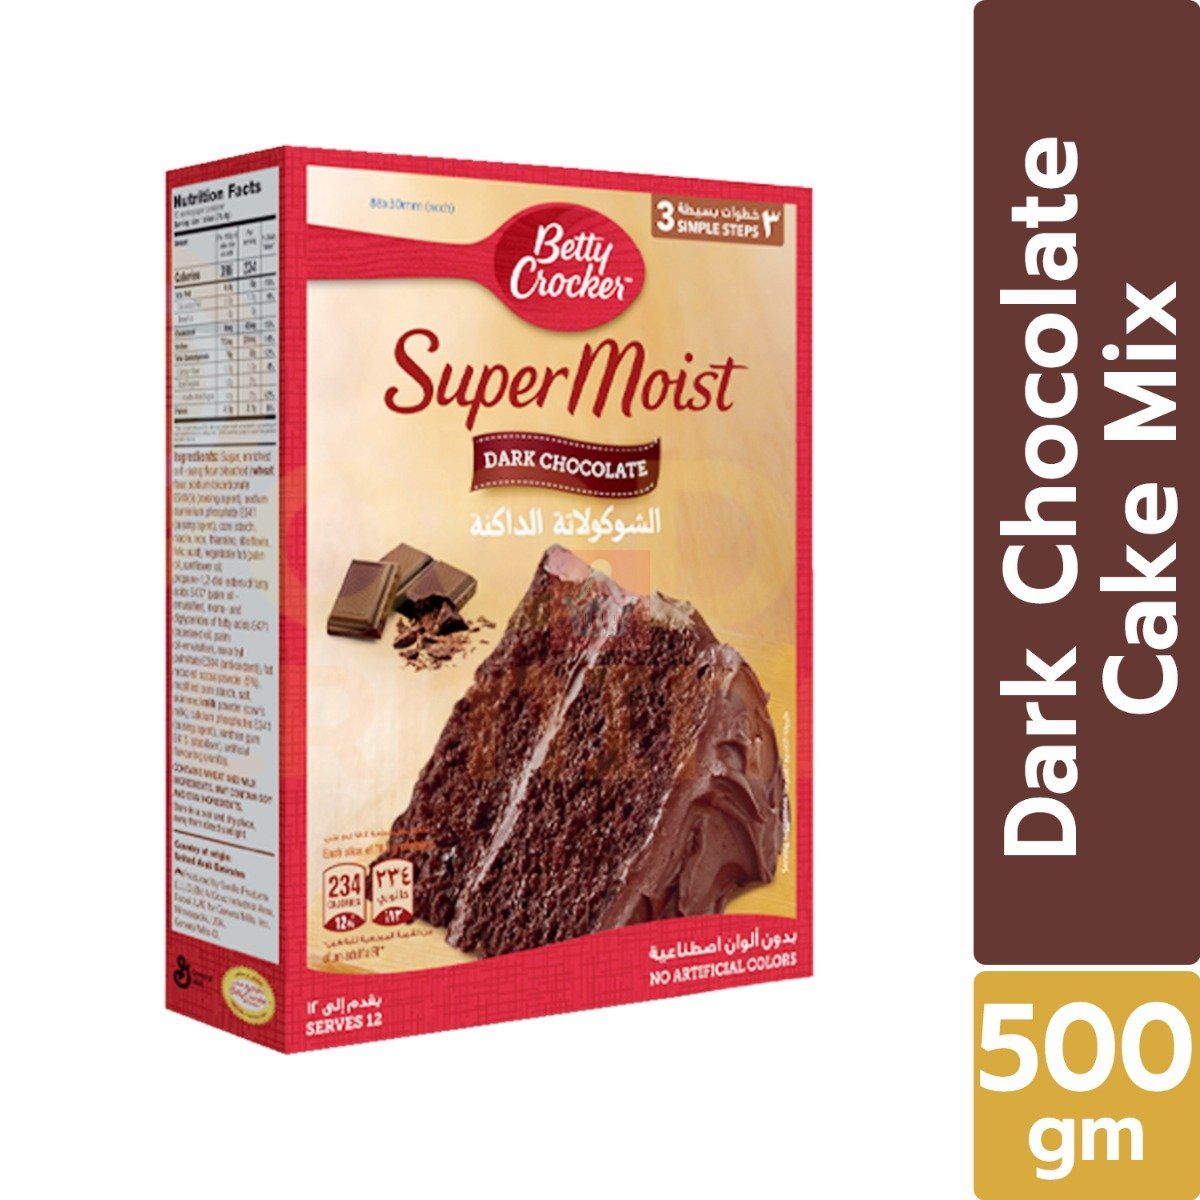 Betty Crocker Super Moist Dark Chocolate Cake Mix 500gm